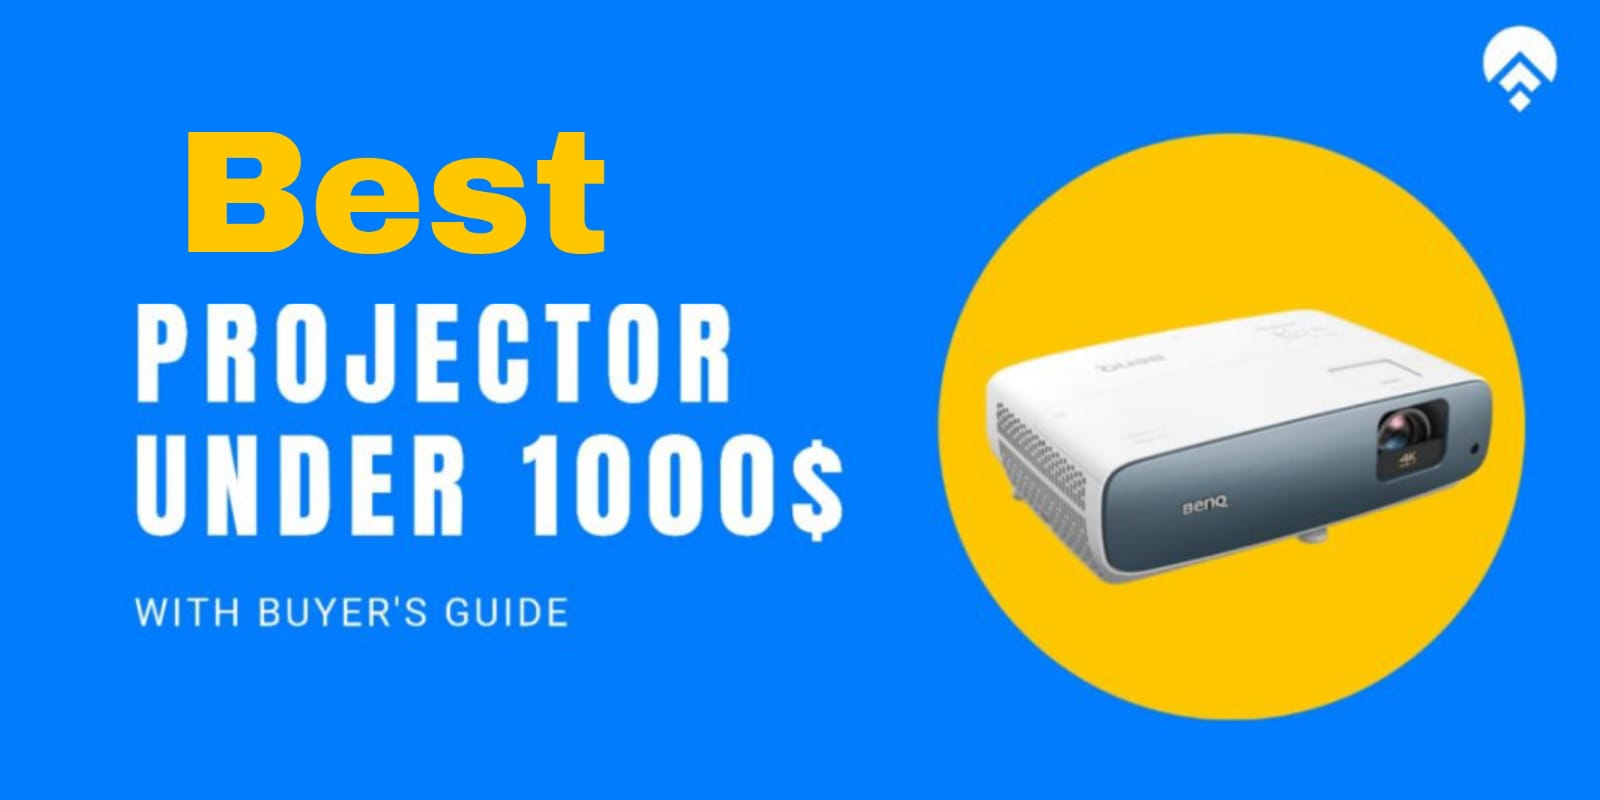 Best projector under 1000